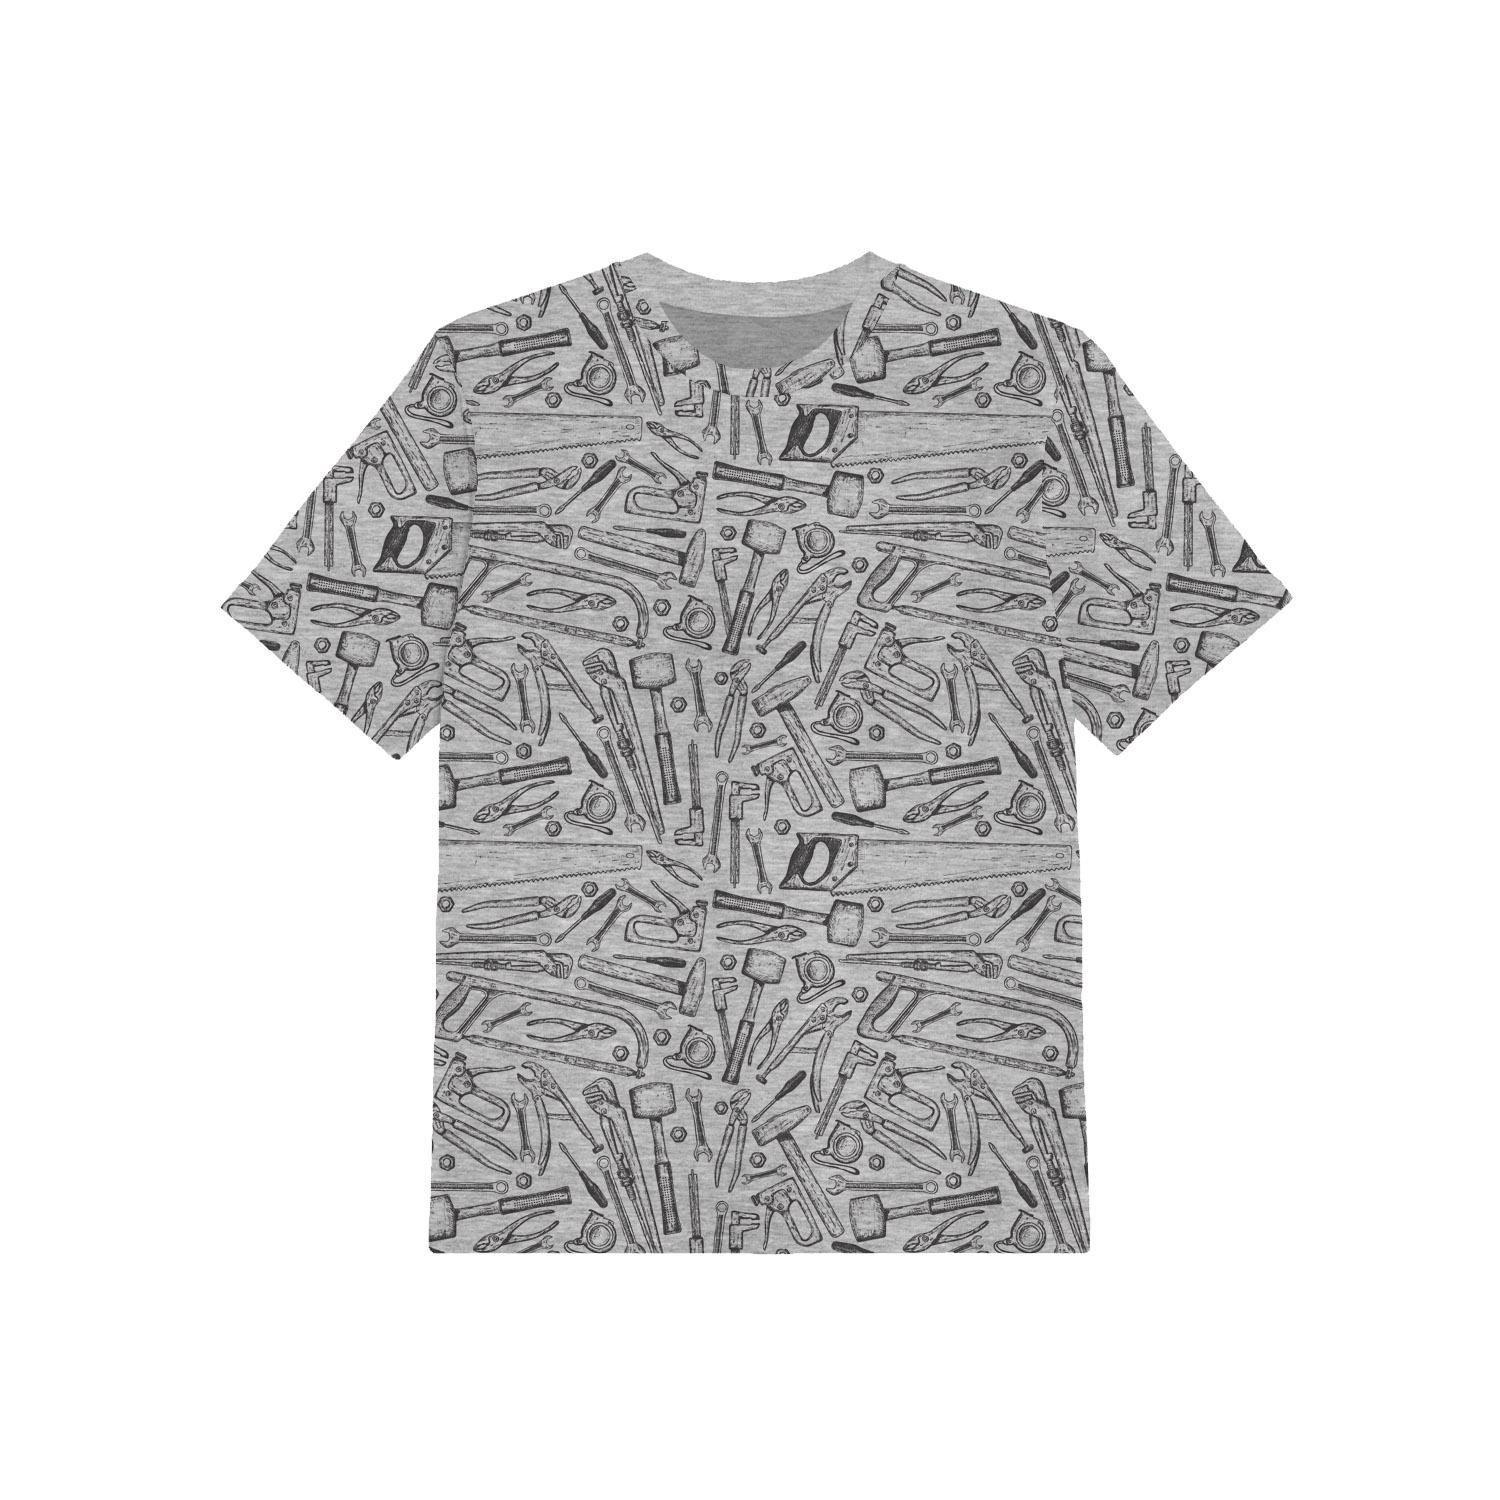 KID’S T-SHIRT- TOOLS (grey) / melange light grey -  single jersey